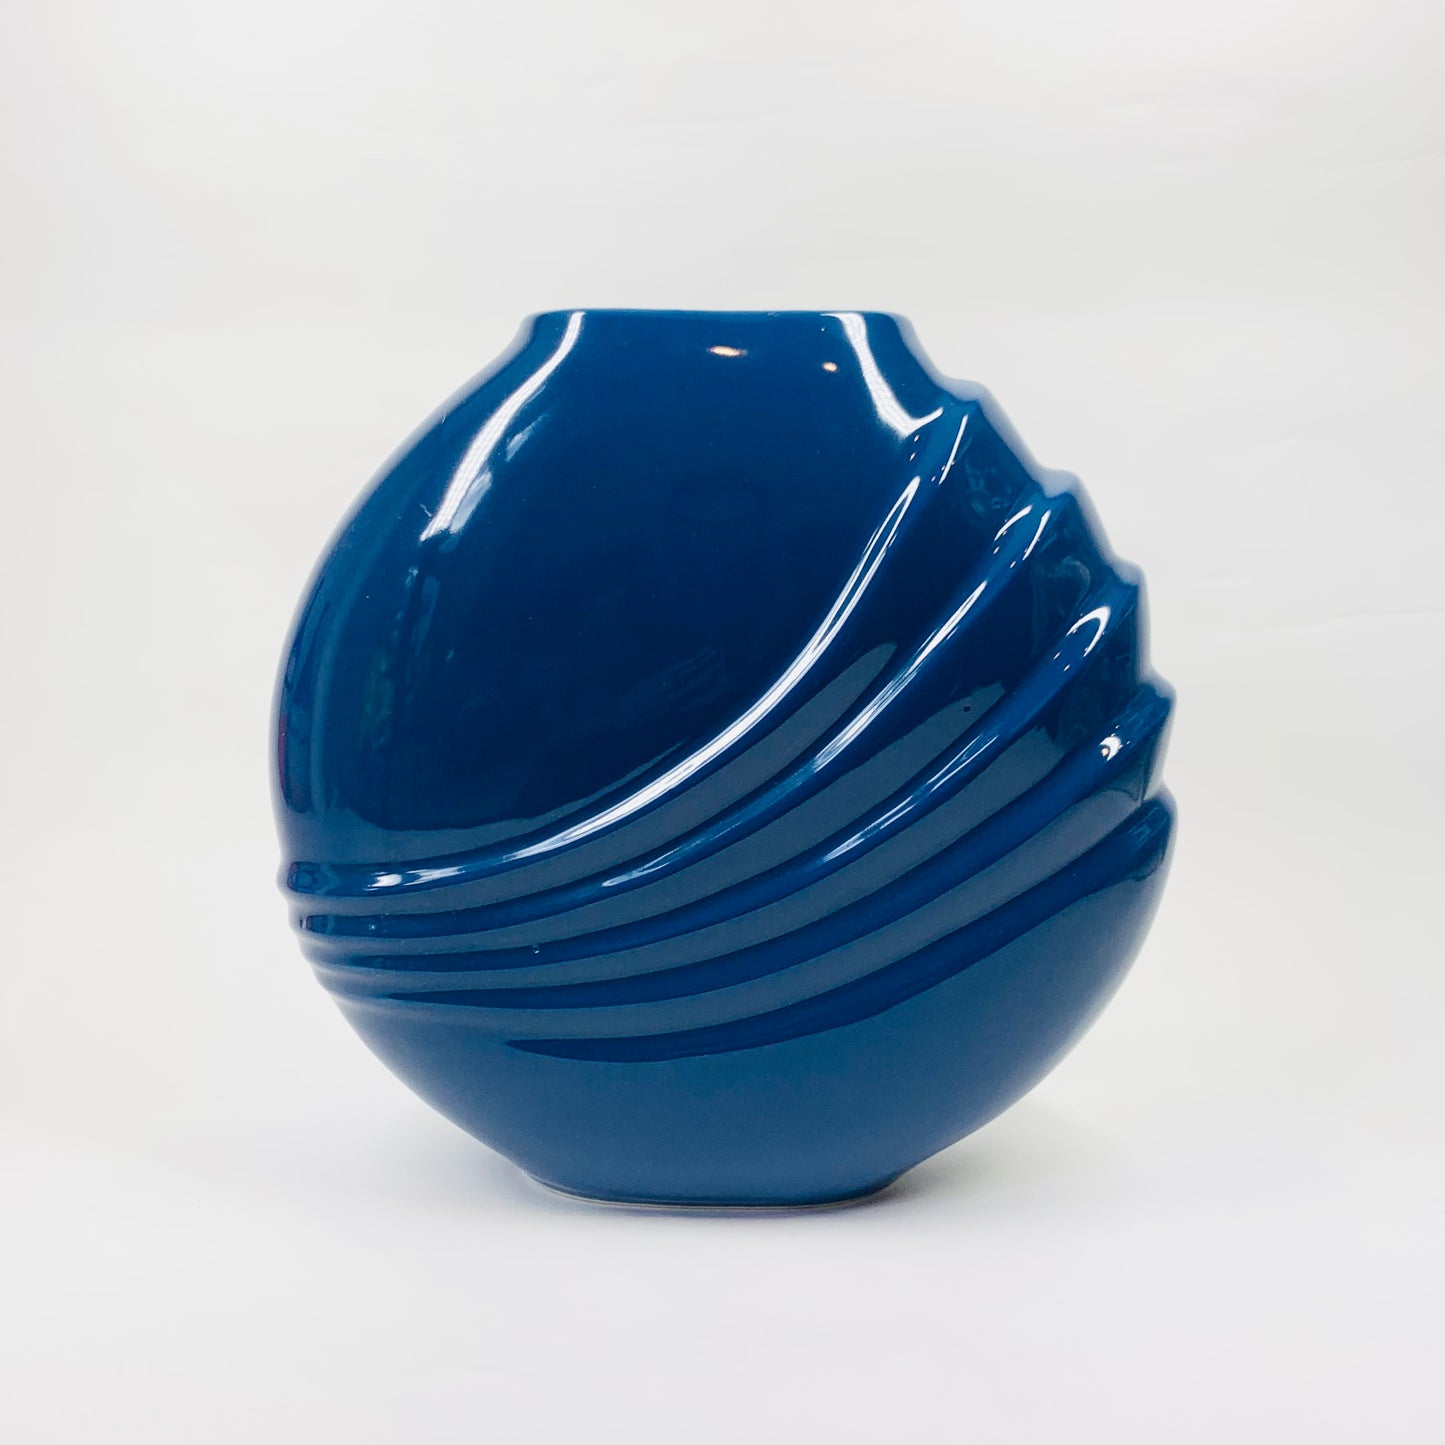 Rare 1970s Japanese blue porcelain round vase